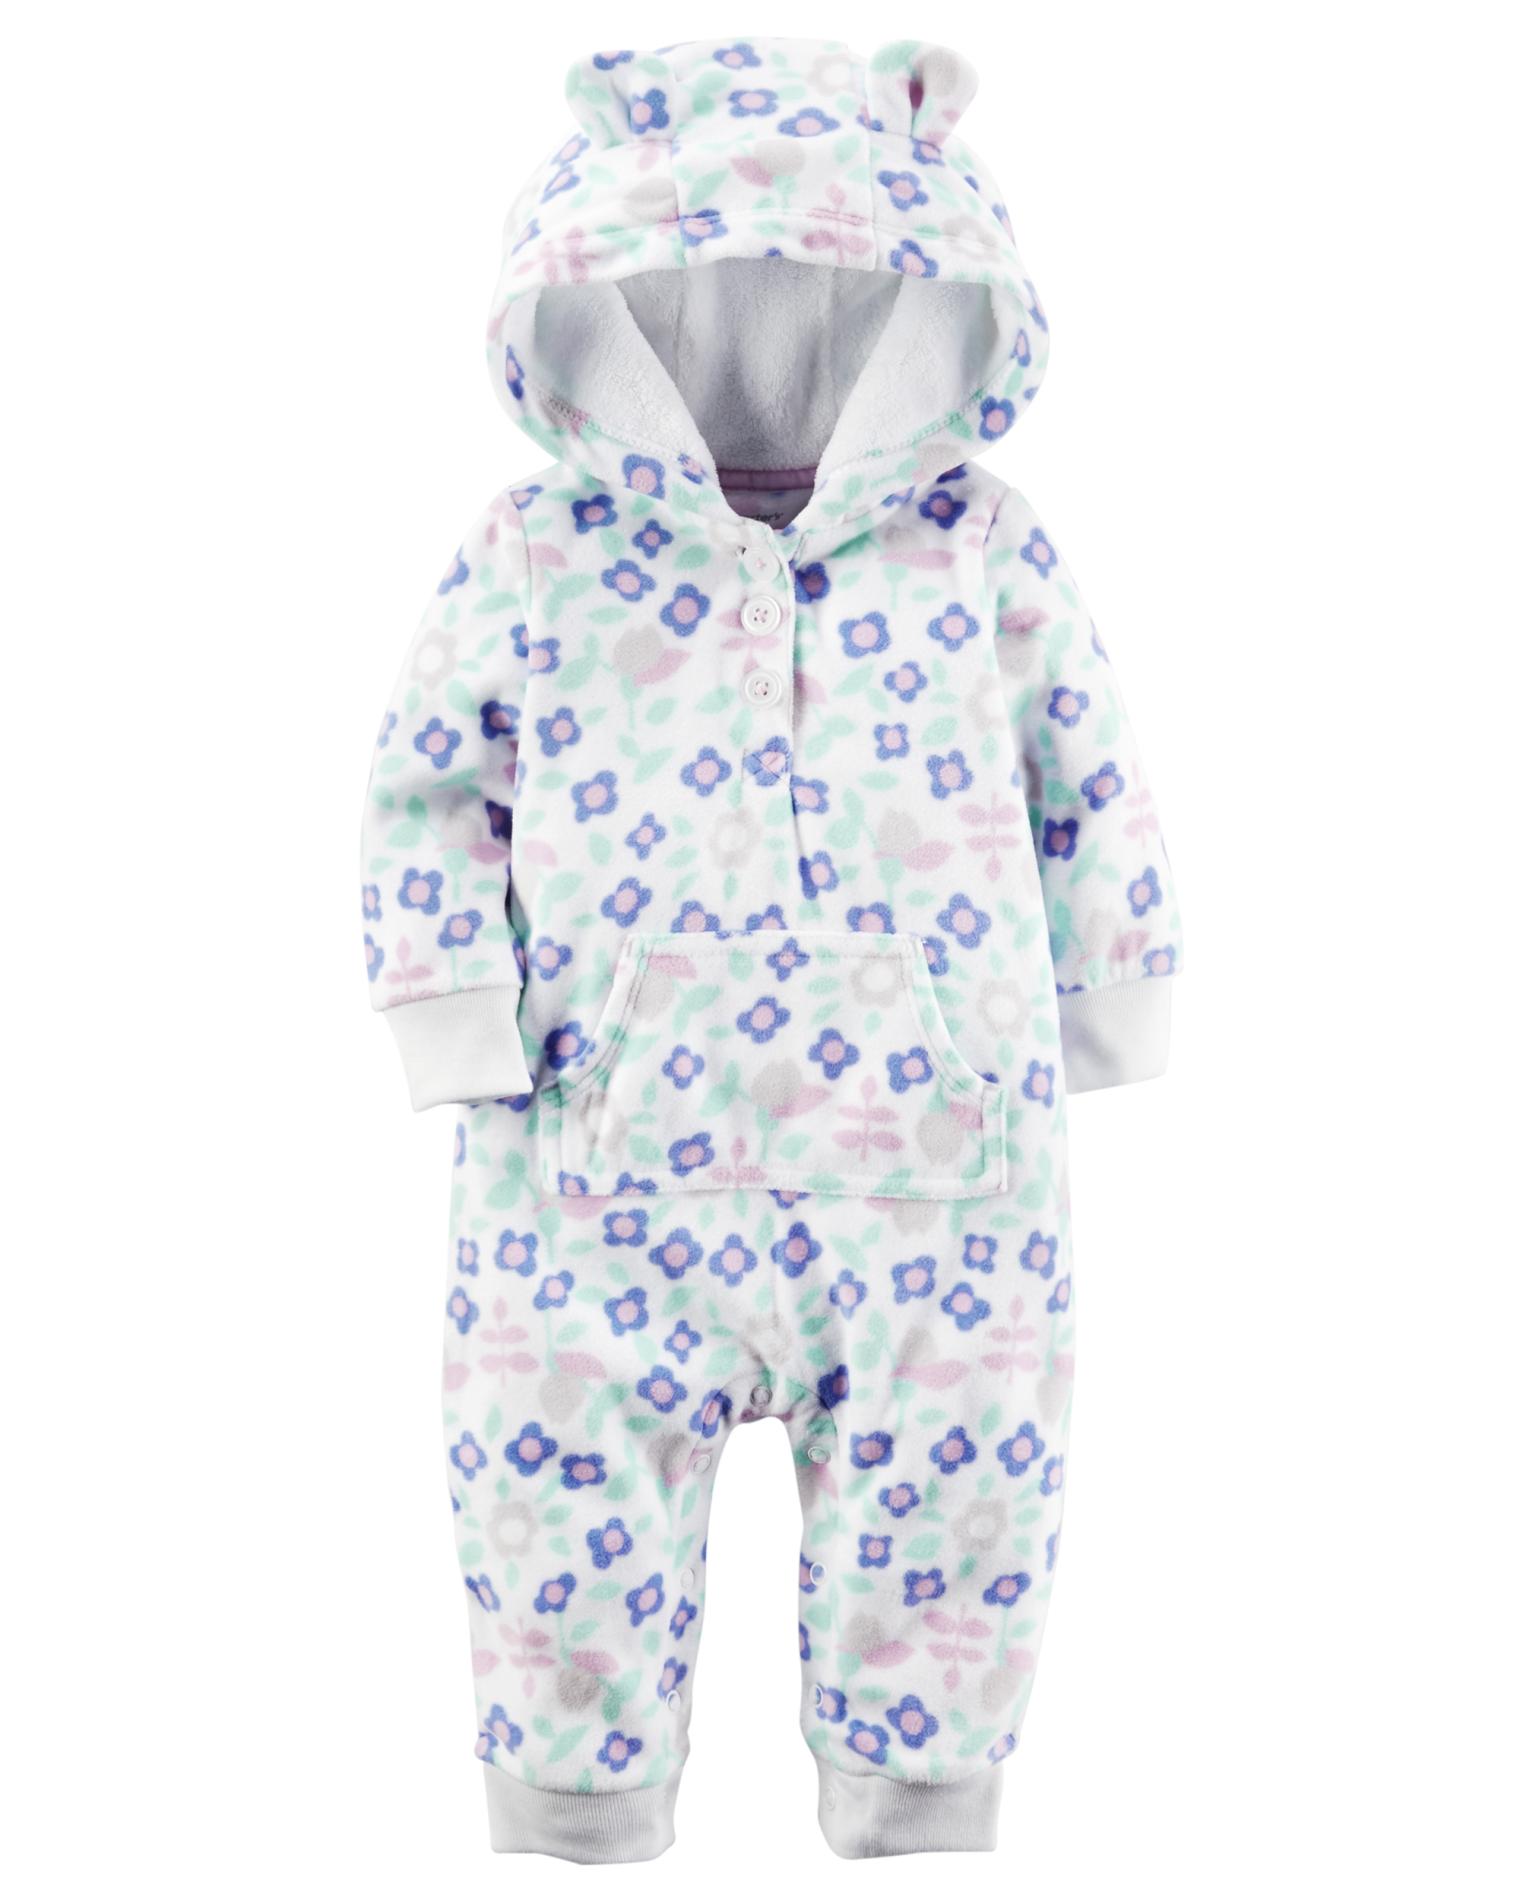 Carter's Newborn & Infant Girls' Hooded Fleece Jumpsuit - Floral Print